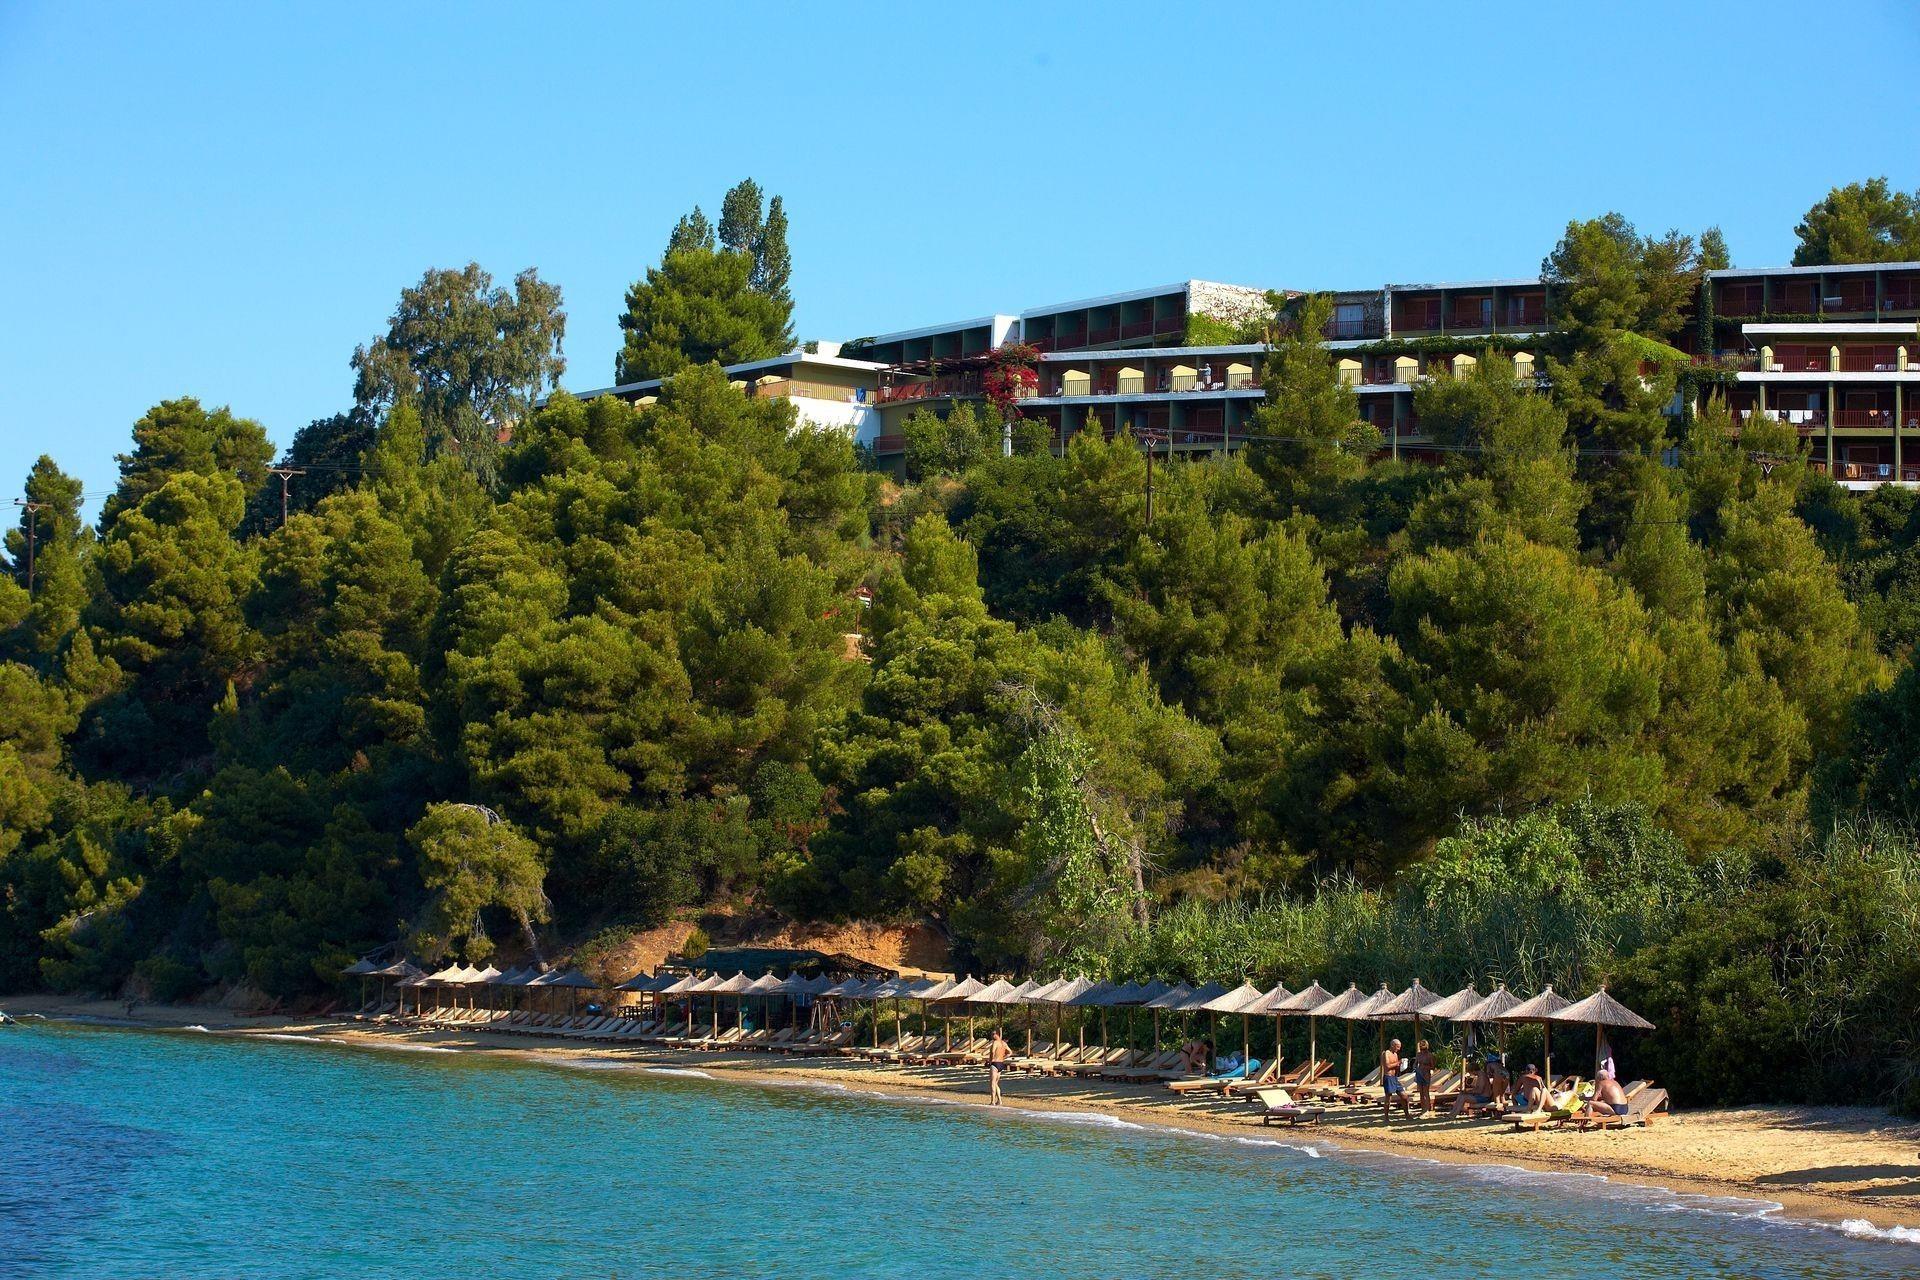 The Skiathos Palace Hotel